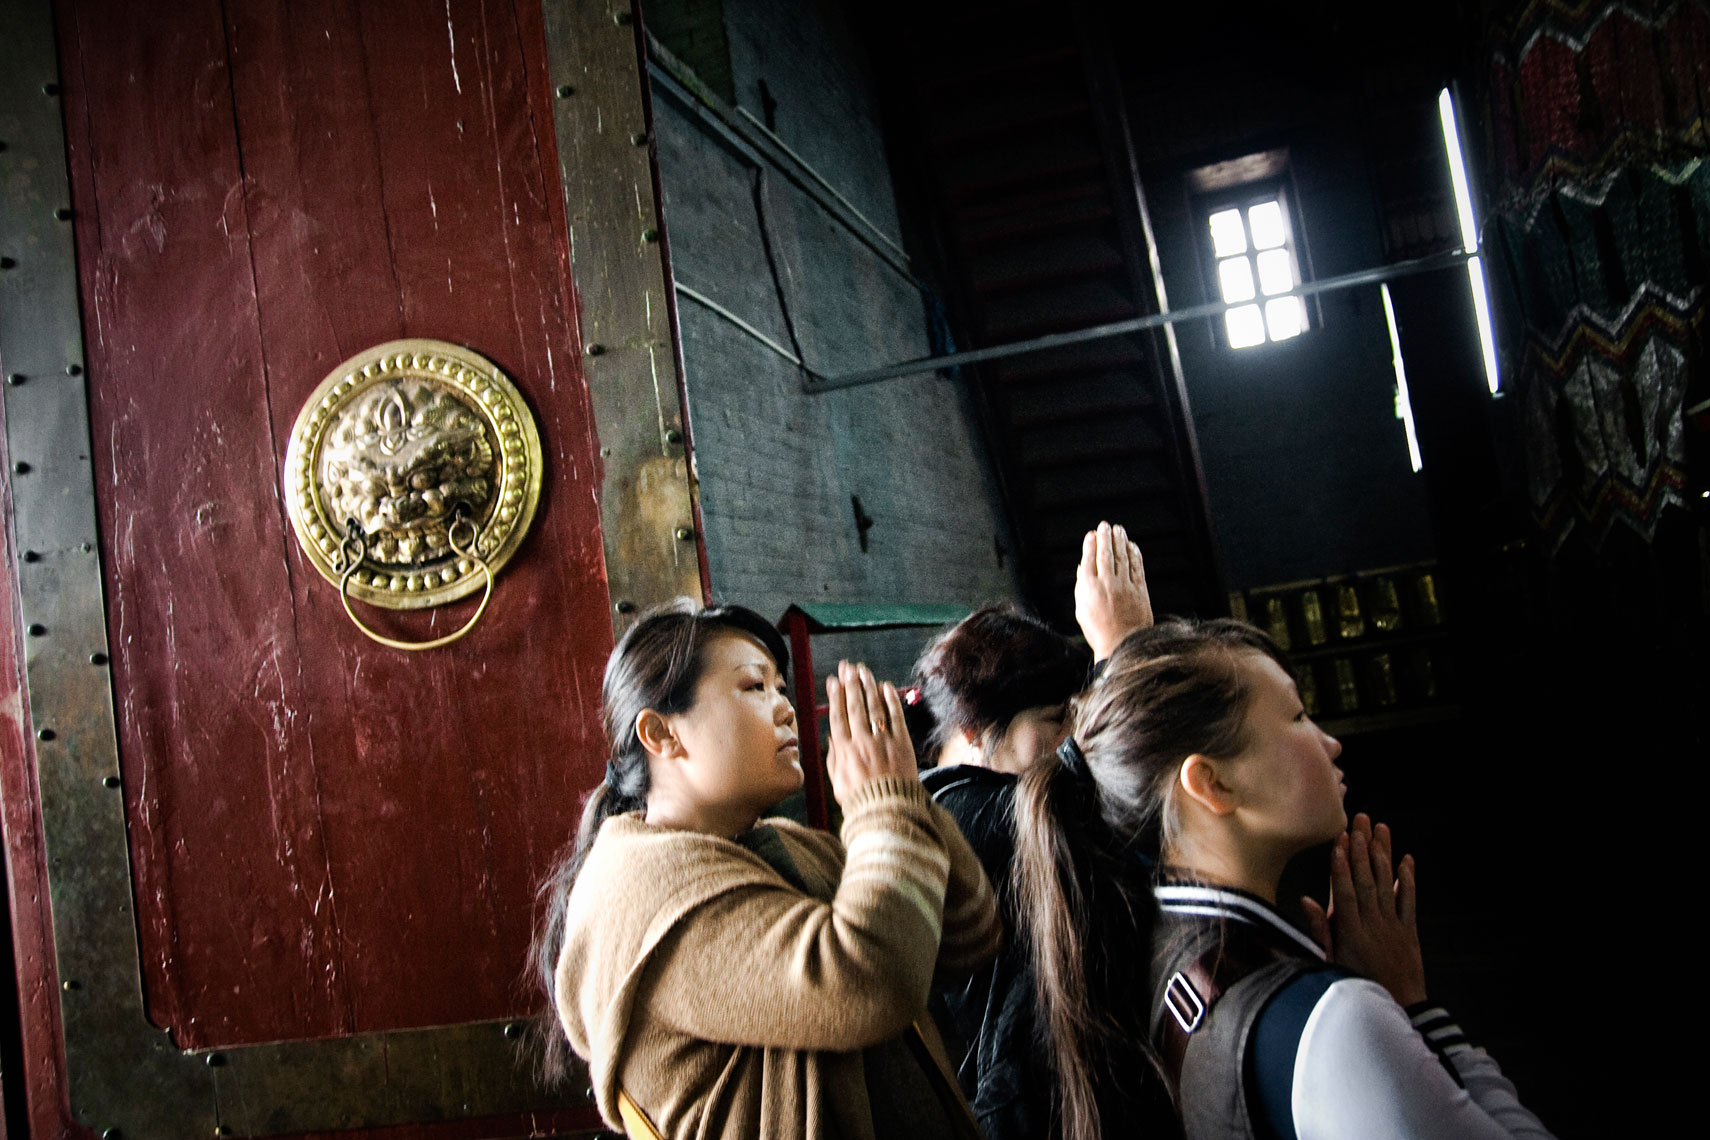 MONGOLIA. Ulan Bator, 2012. People pray inside the Boddhisattva Avalokiteshvara Temple in the Gandantegchinlen Monastery. The monastery is situated on a hill top near the Peace Avenue, city's main road.